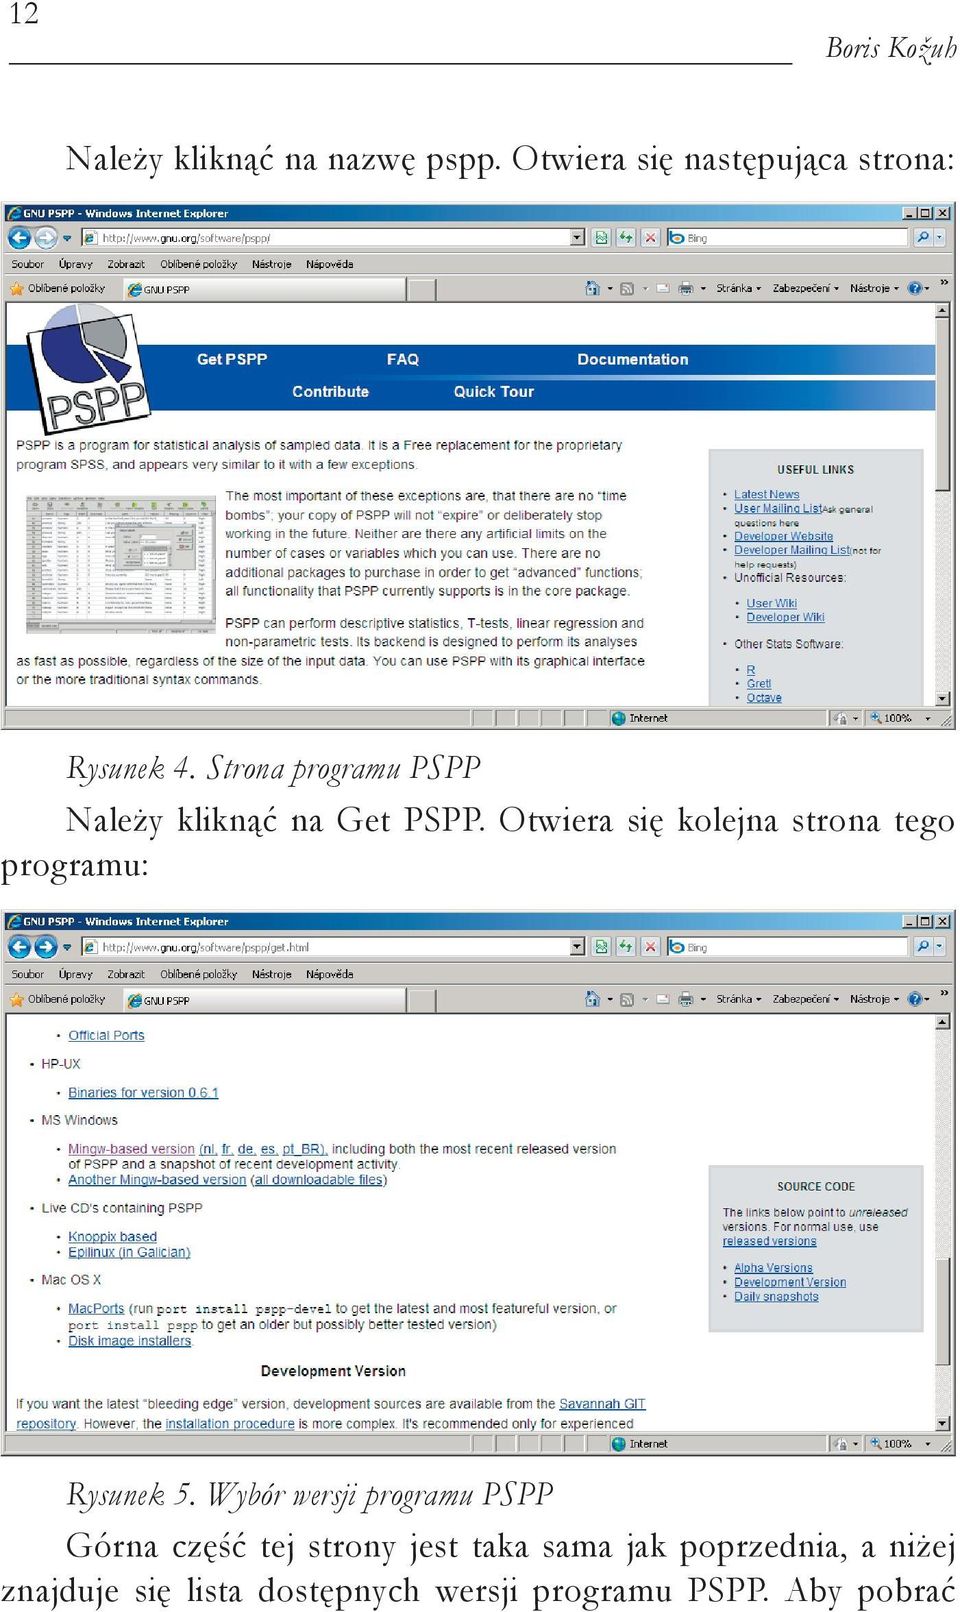 Strona programu PSPP Należy kliknąć na Get PSPP.